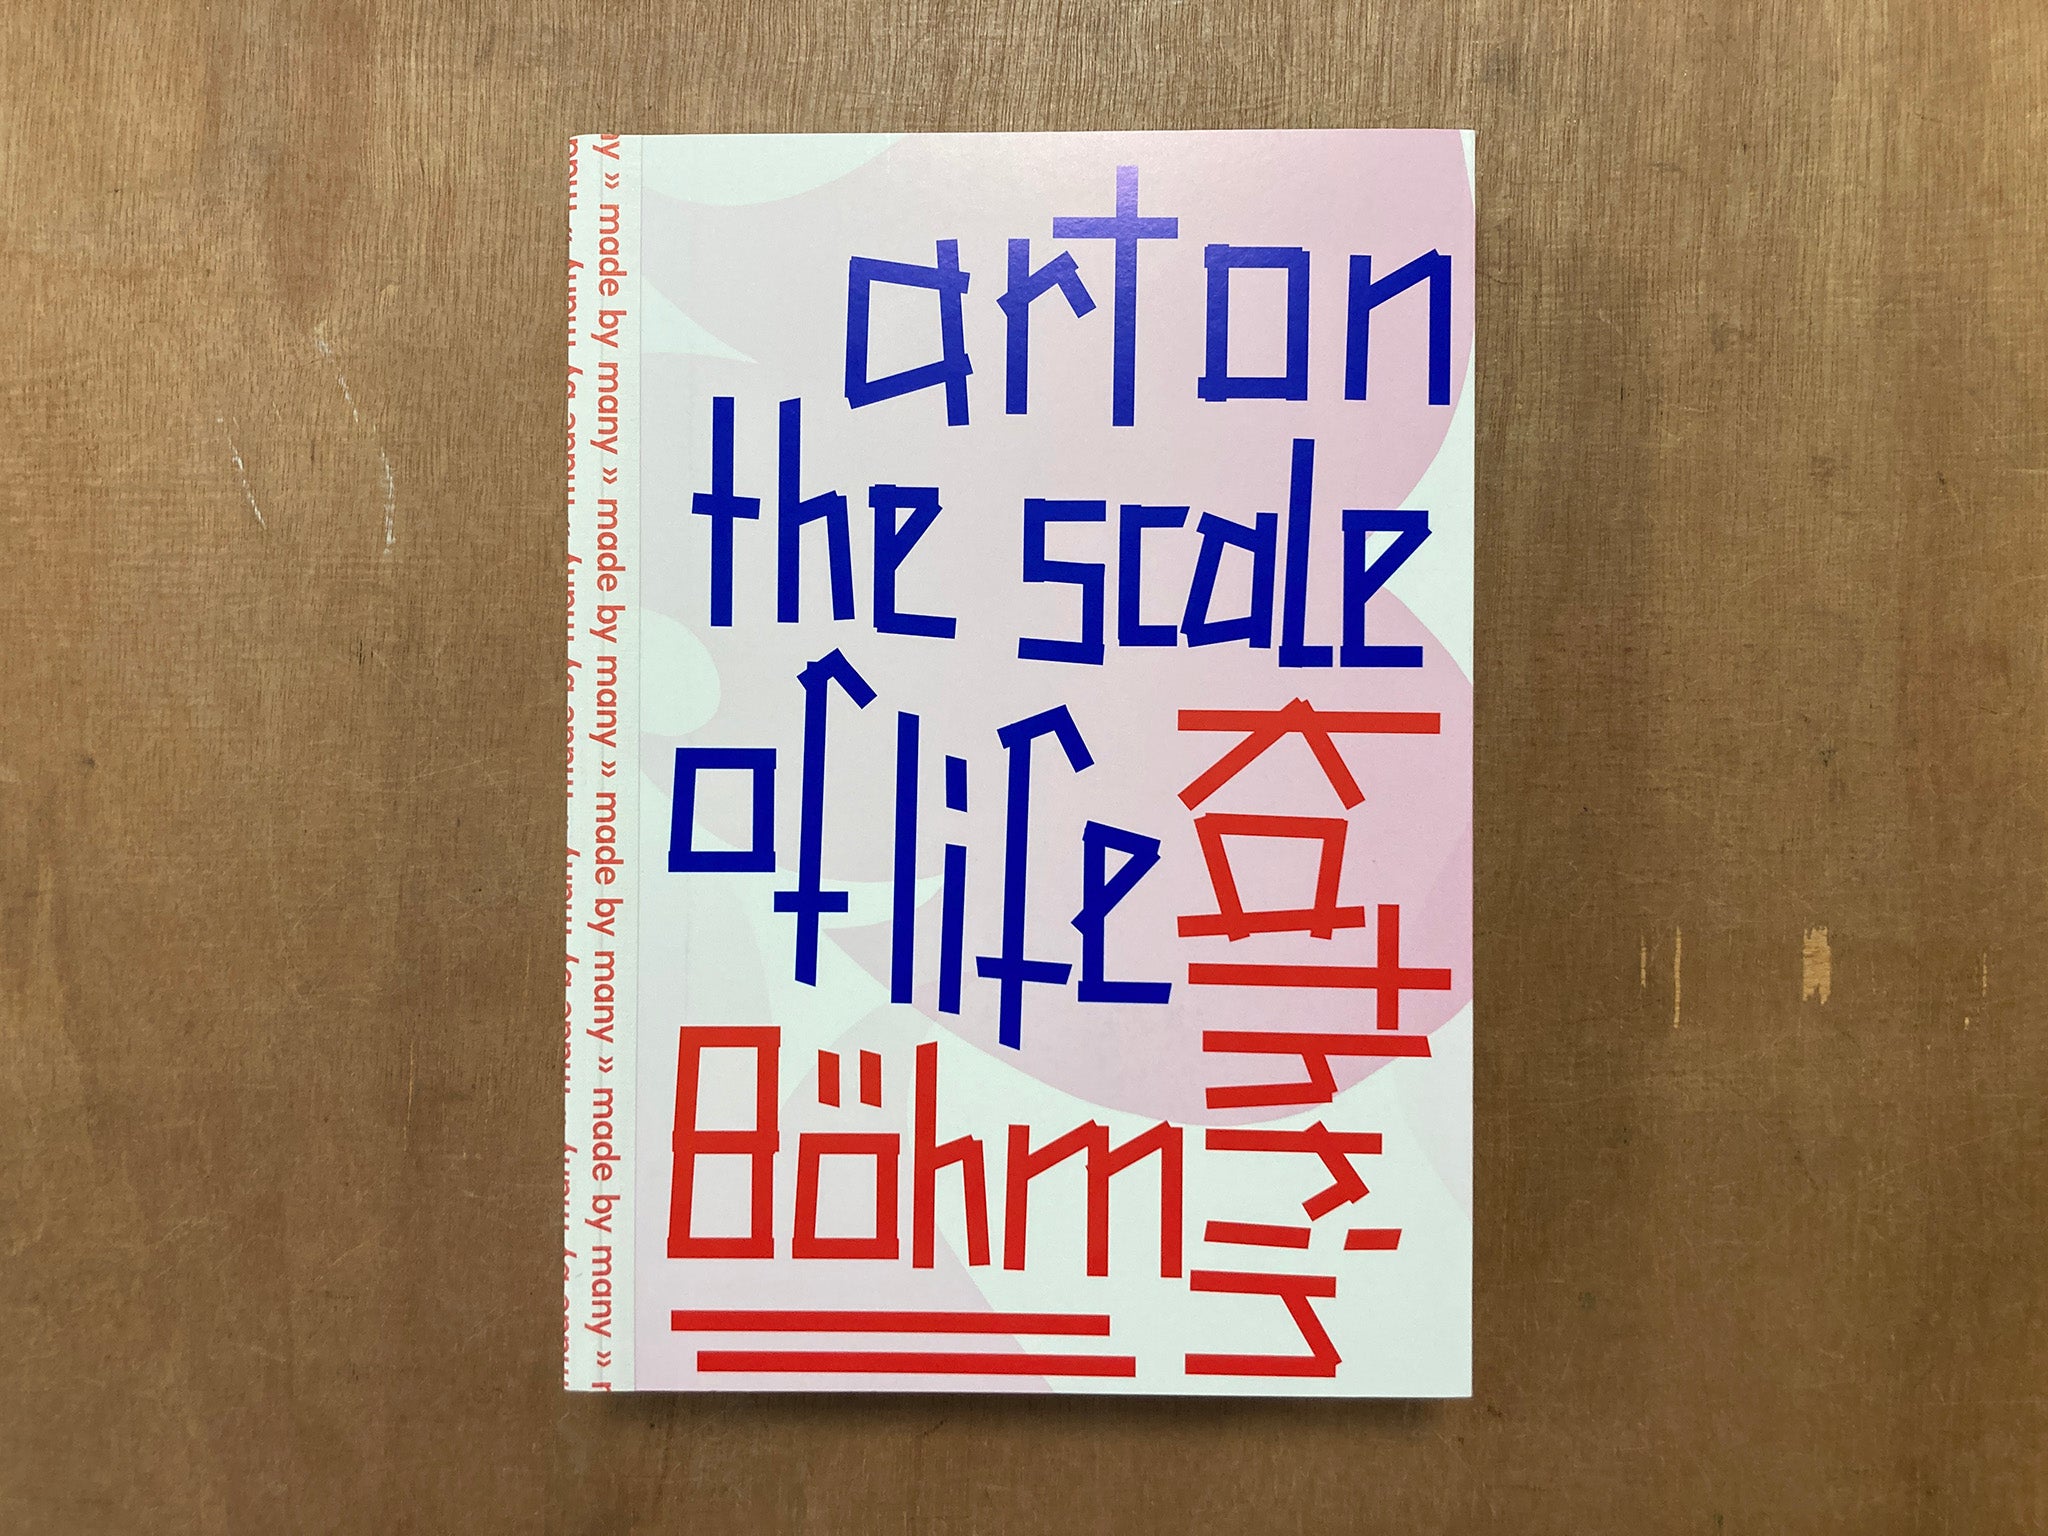 KATHRIN BÖHM: ART ON THE SCALE OF LIFE edited by Gerrie Van Noord, Paul O'Neill, Mick Wilson